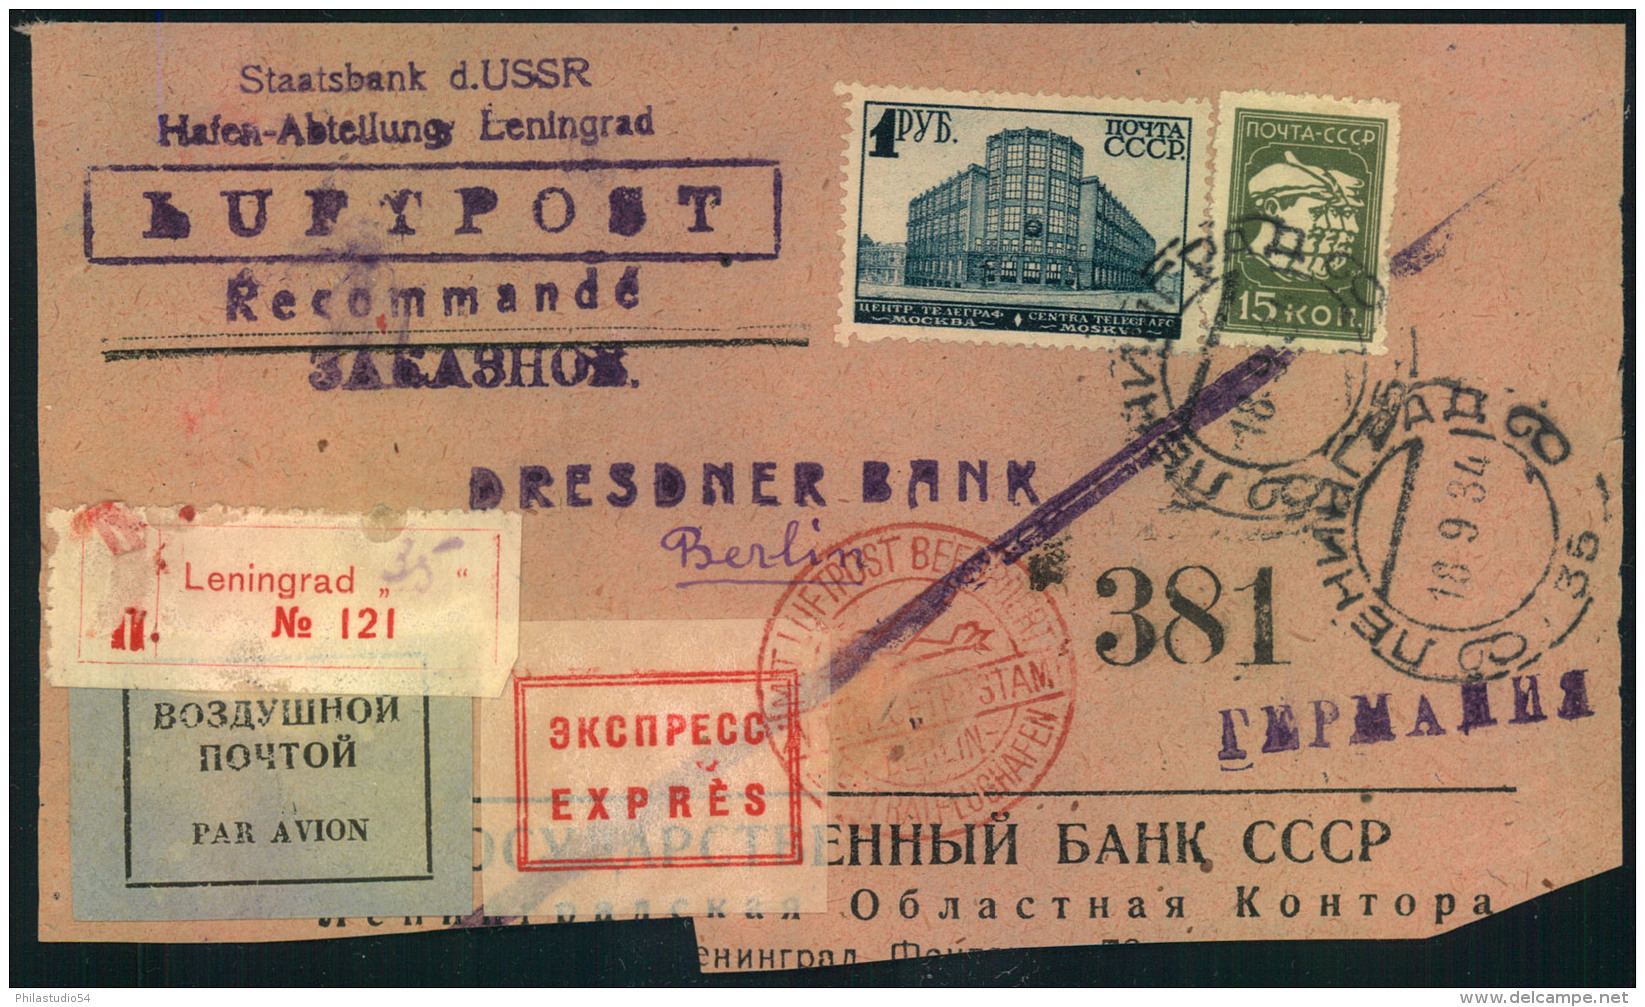 1934, Large Part Of Registered Express Letter Via Airmail Bankletter From LENINGRAD To Berlin. - Brieven En Documenten